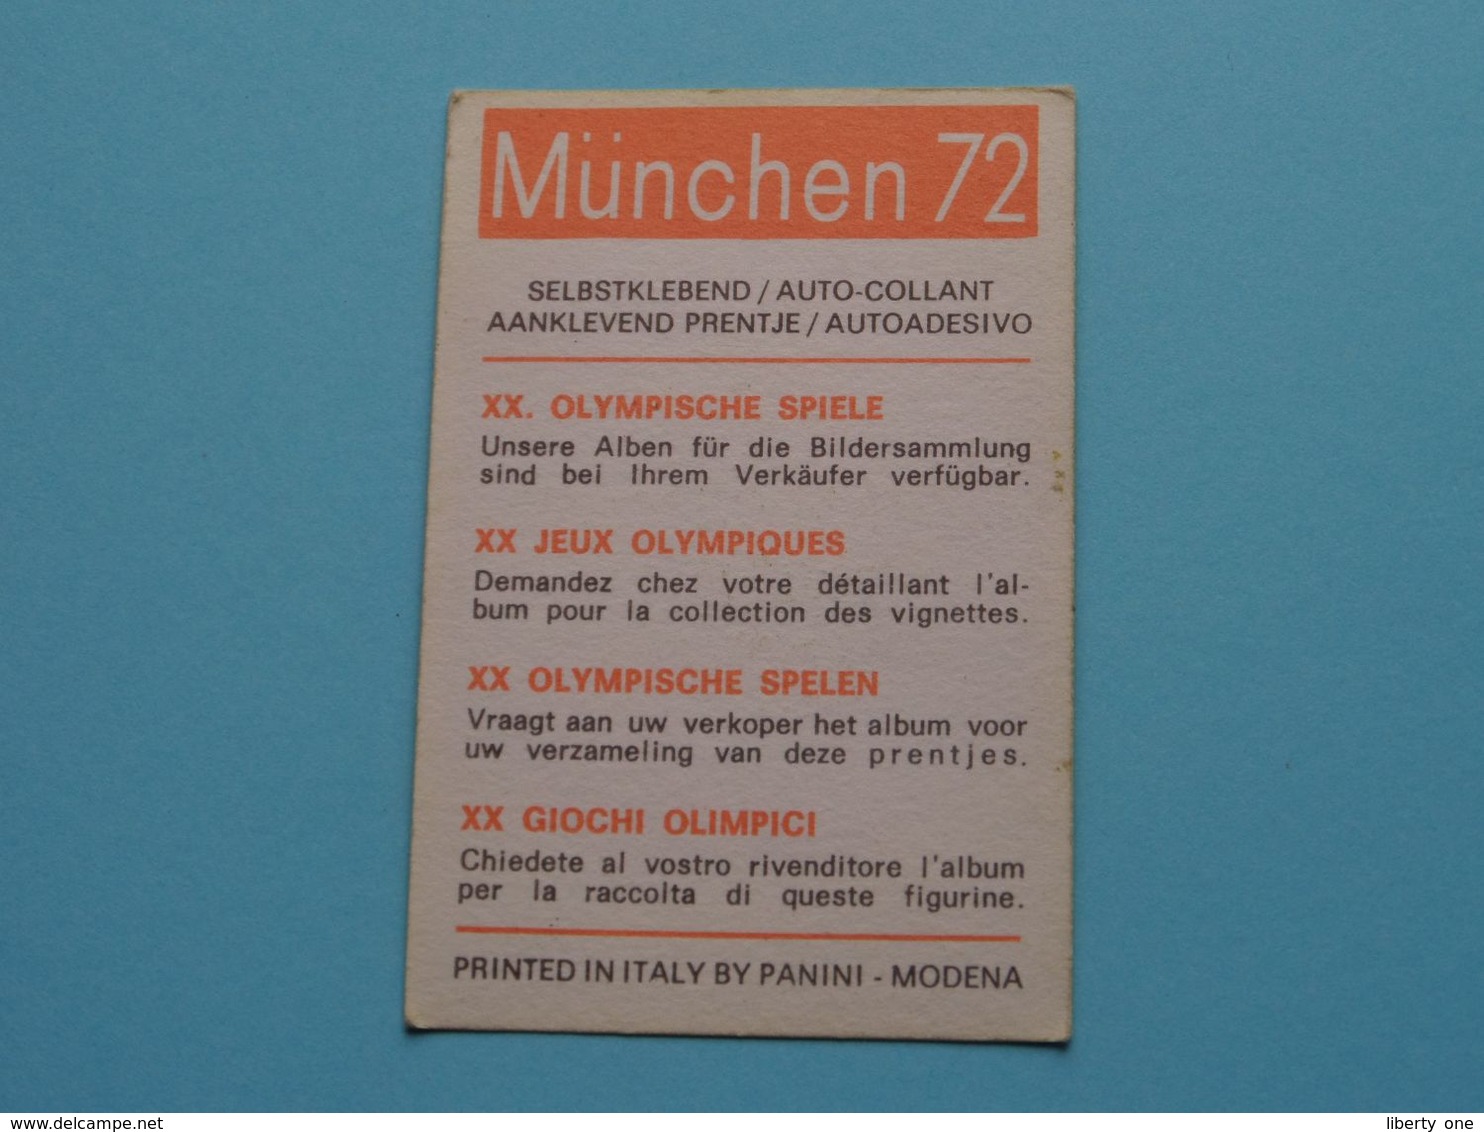 KAREL LISMONT België ( München 72 ) > ( Nr. 82 ) - Figurine PANINI ! - Athlétisme